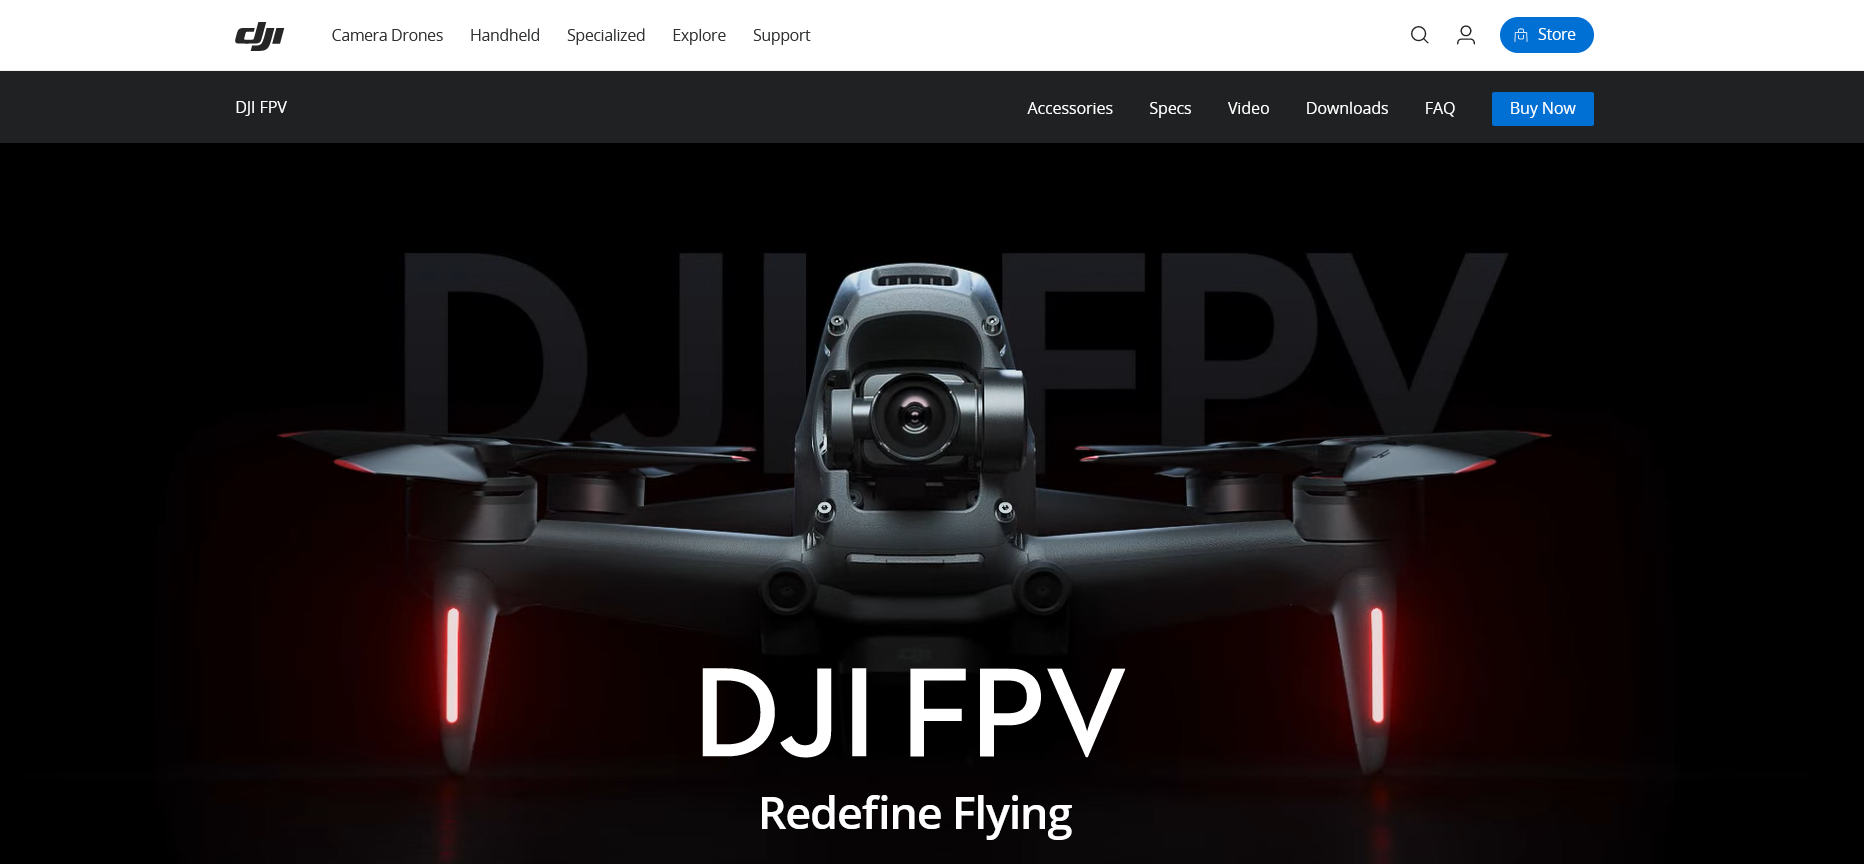 DJI FPV drones